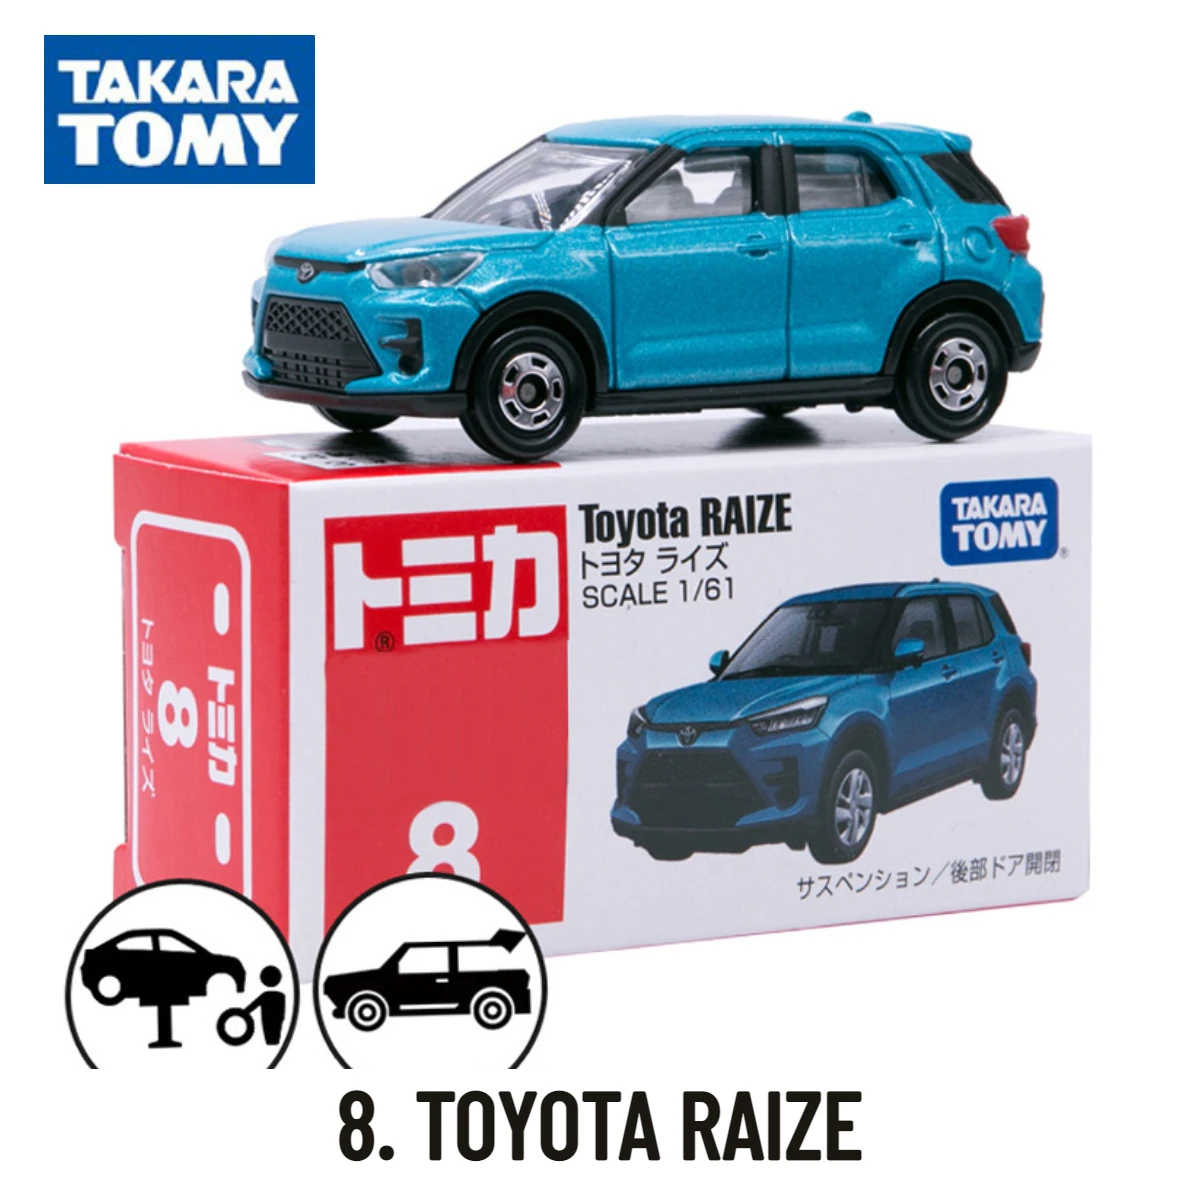 Takara Tomy Tomica Cars 1-30, Scale Model TOYOTA RAIZE Replica, Kids Room Decor Xmas Gift Toys for Baby Boys